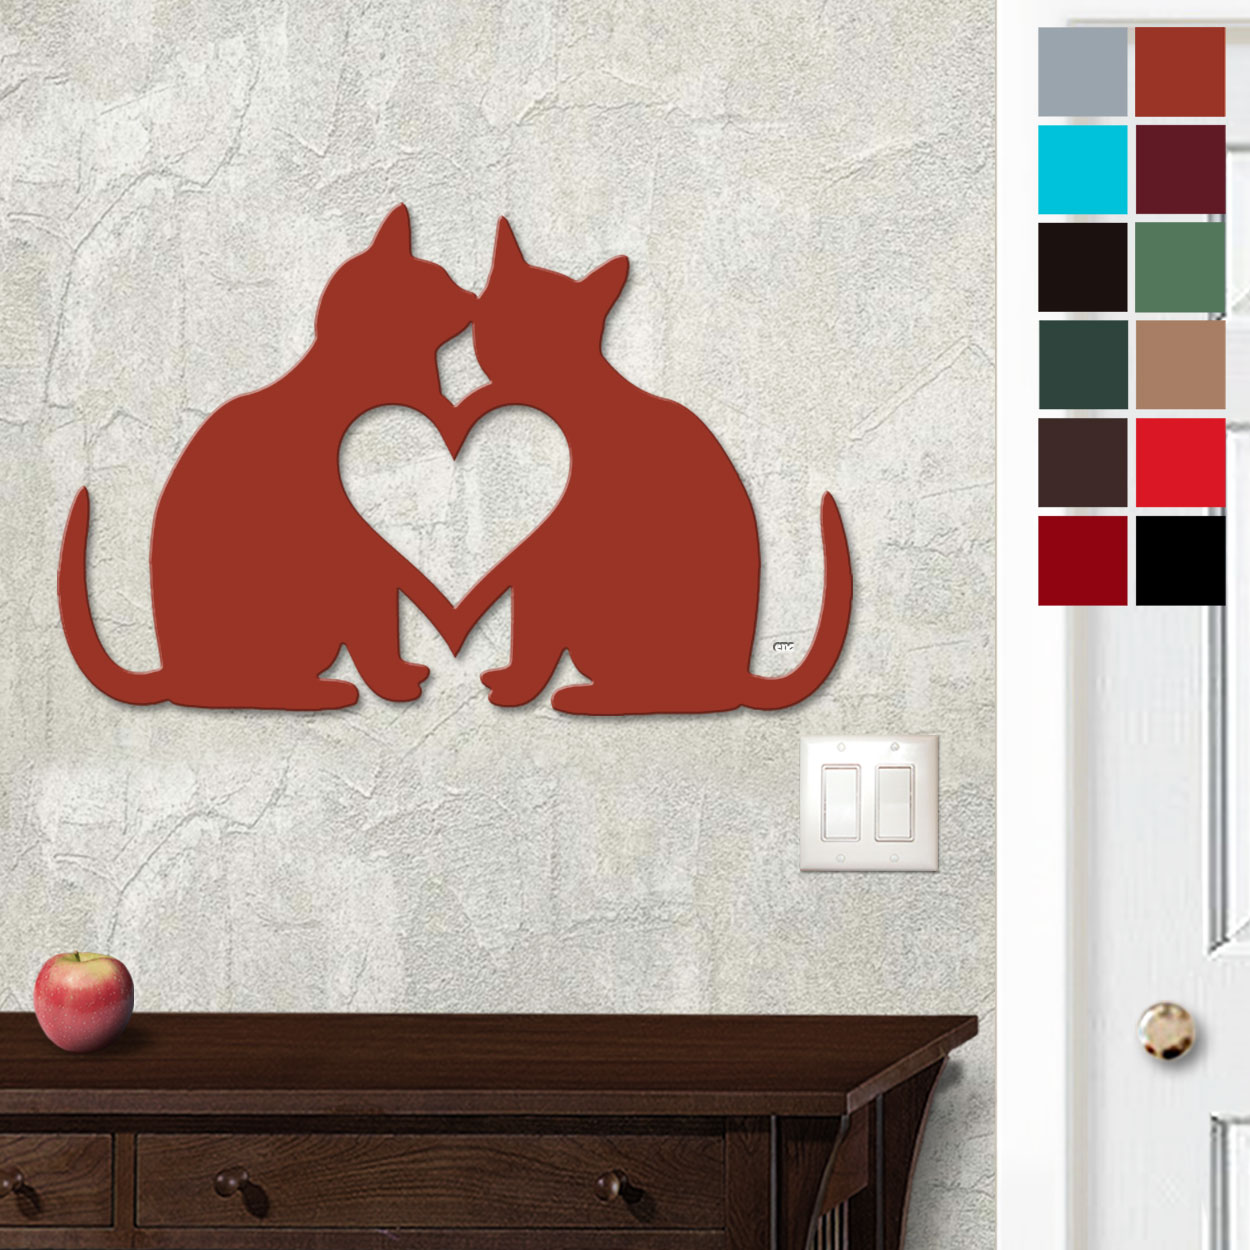 625007 - 18 or 24in Metal Wall Art - Cat Lovers - Choose Color